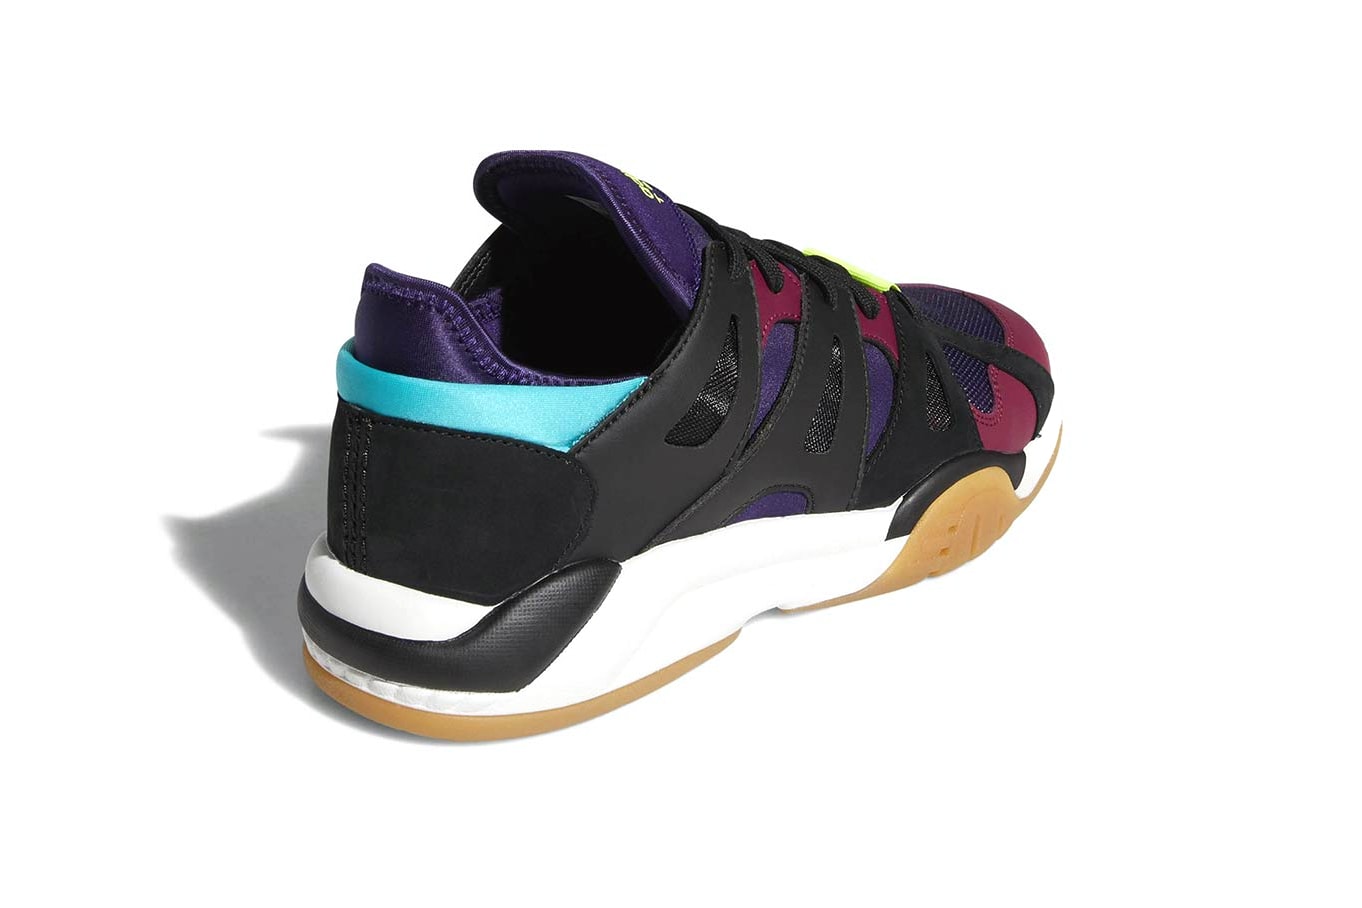 adidas Torsion Dimension Low Dark Plum black blue purple white gum release info sneakers